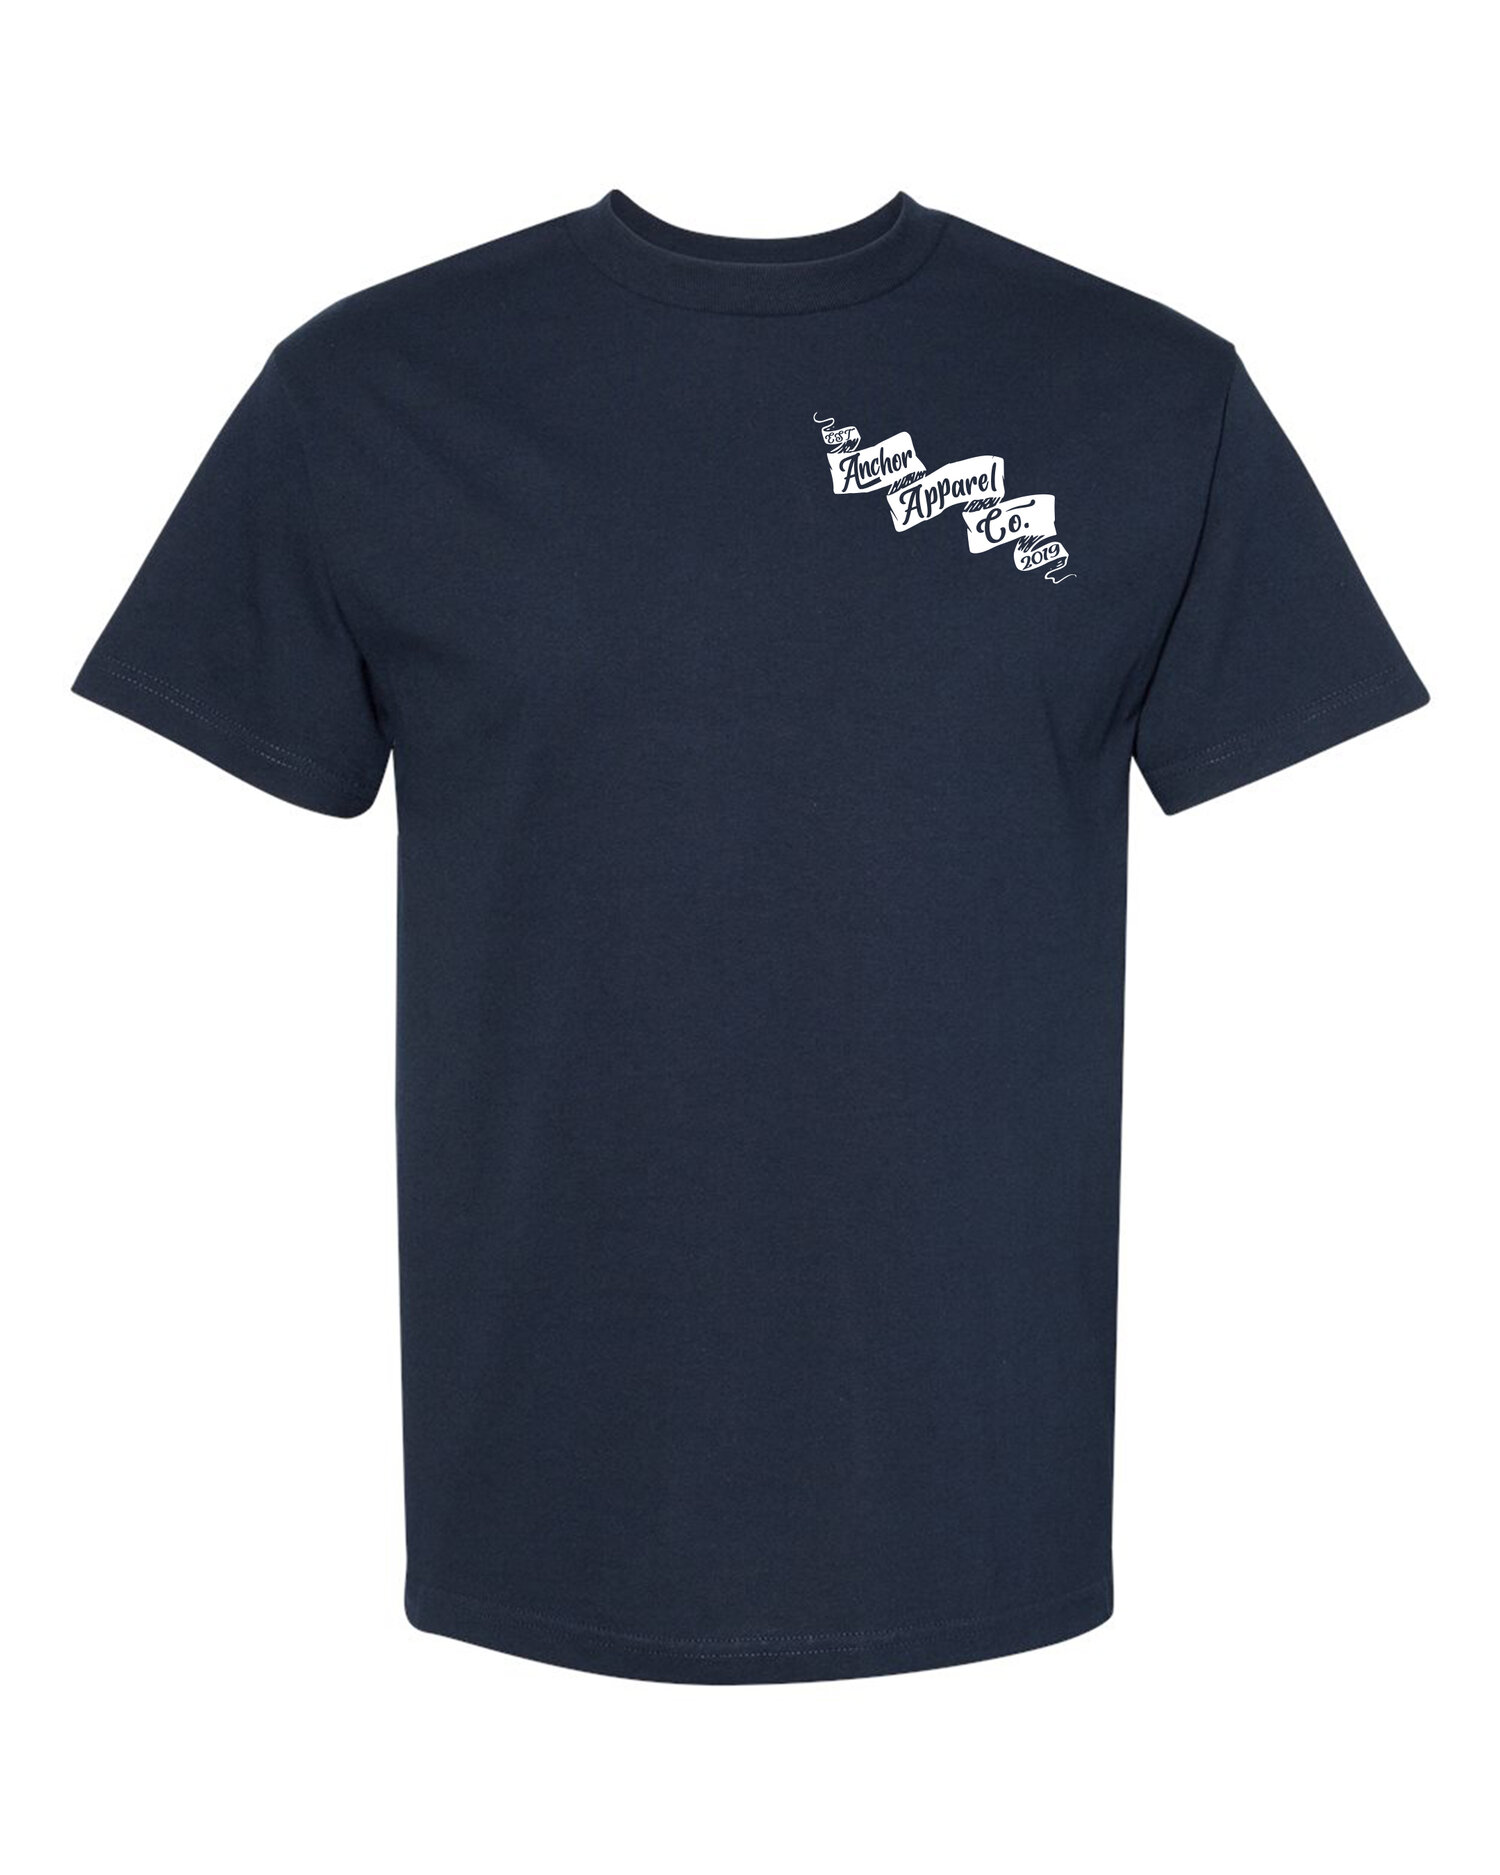 Kraken Pocket Print T-Shirt